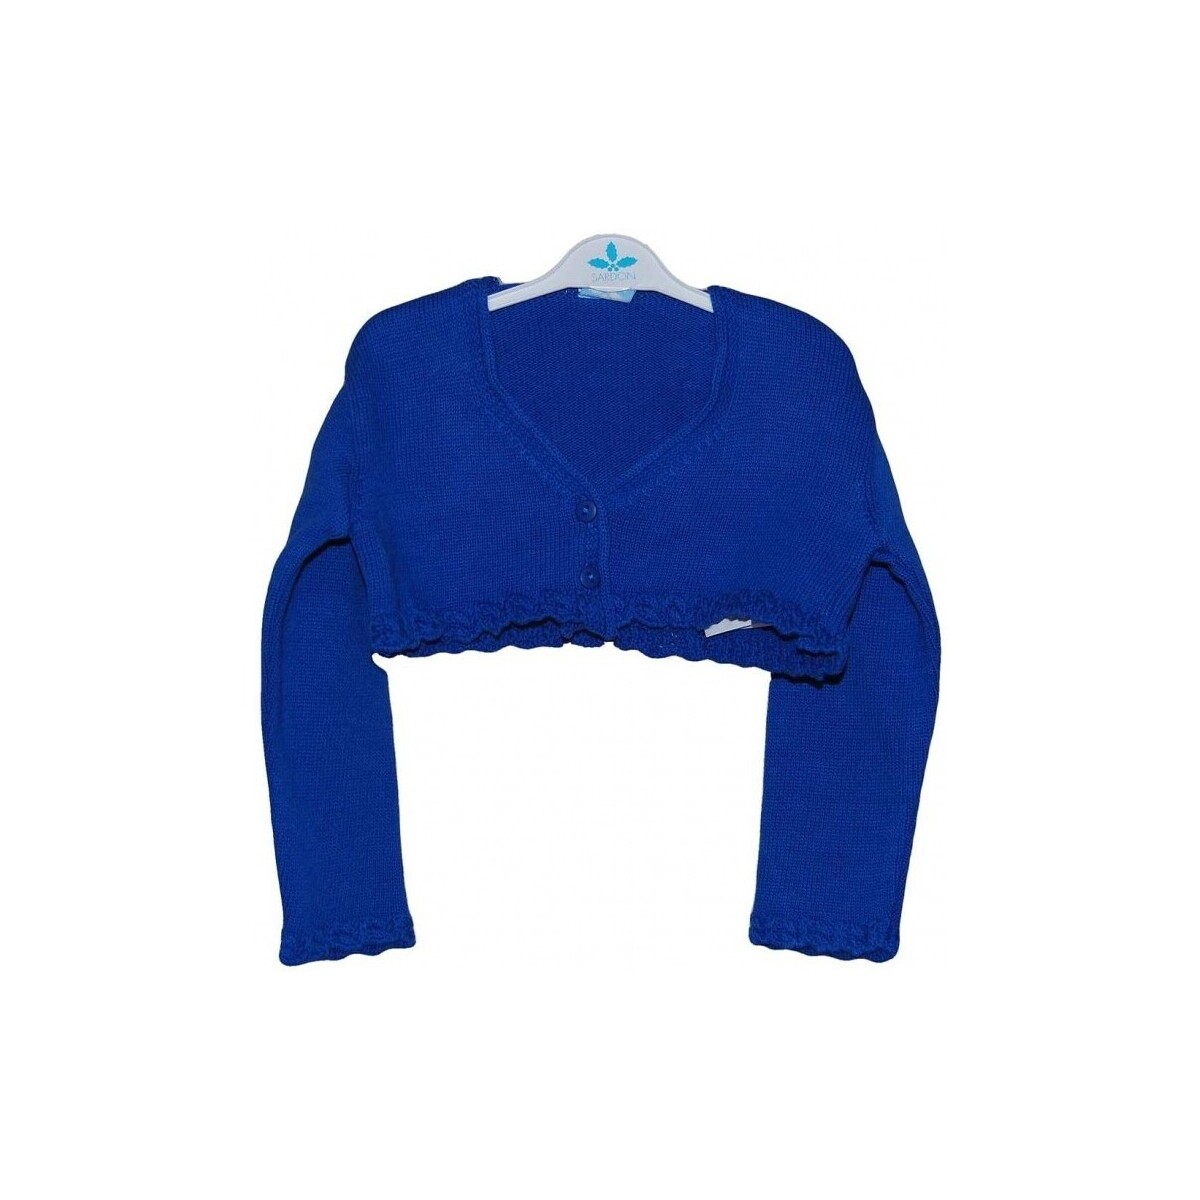 Textil Kabáty Sardon 21426-1 Modrá